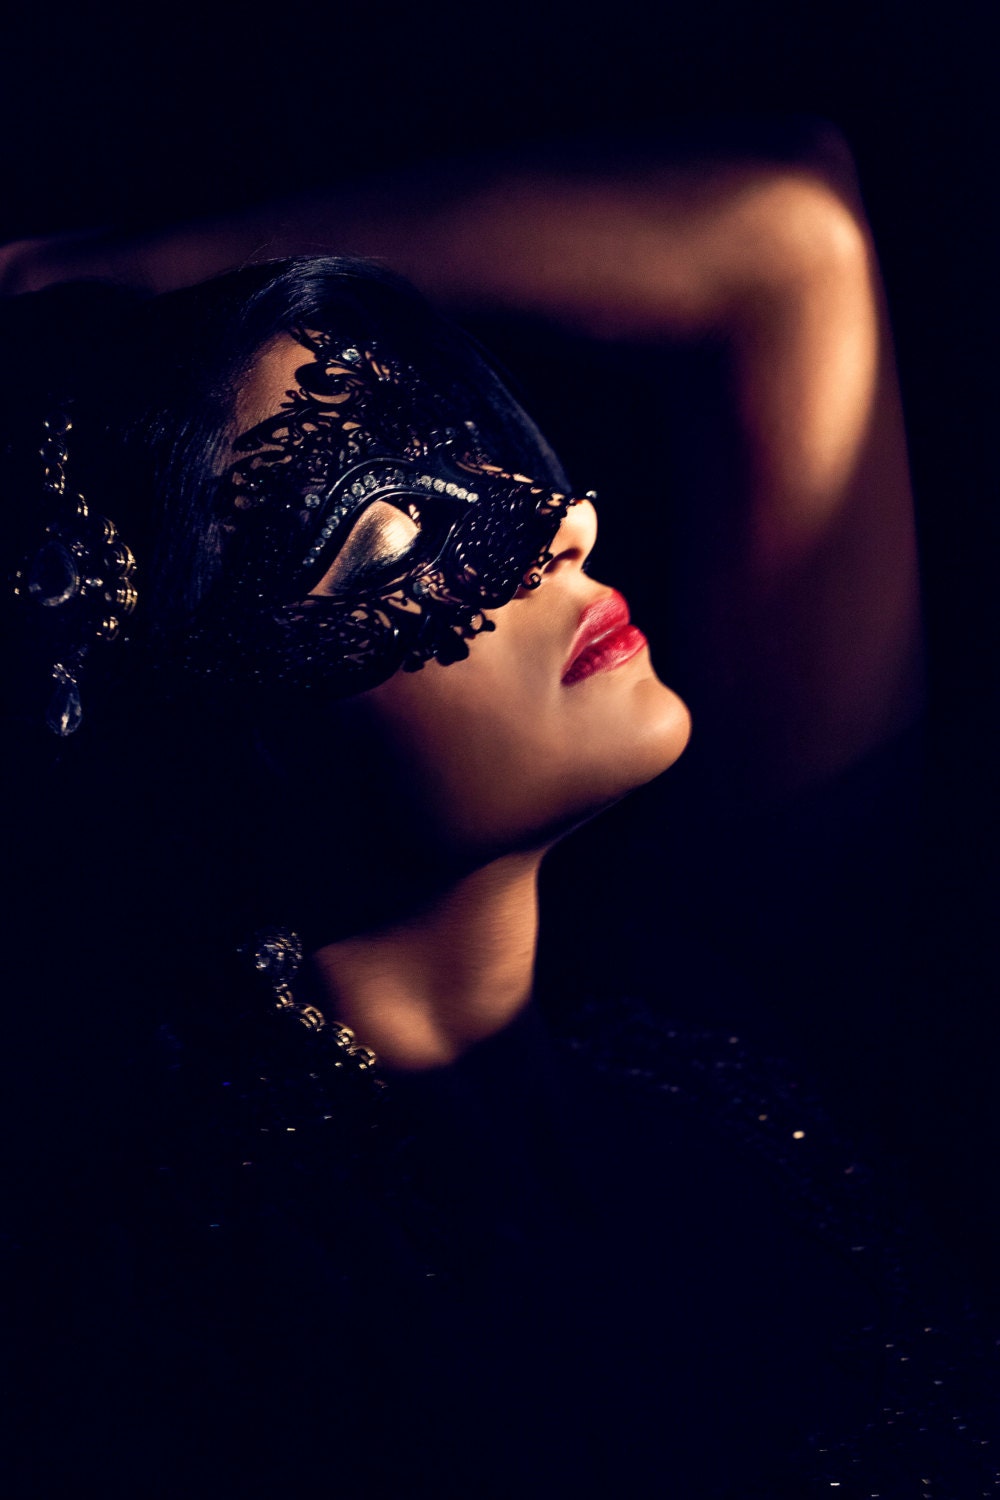 Lady Of Luck Masquerade Masks, Venetian Masks, Metal Masquerade Mask  Women's Laser Cut Party Mask (black Masquerade Mask For Women)